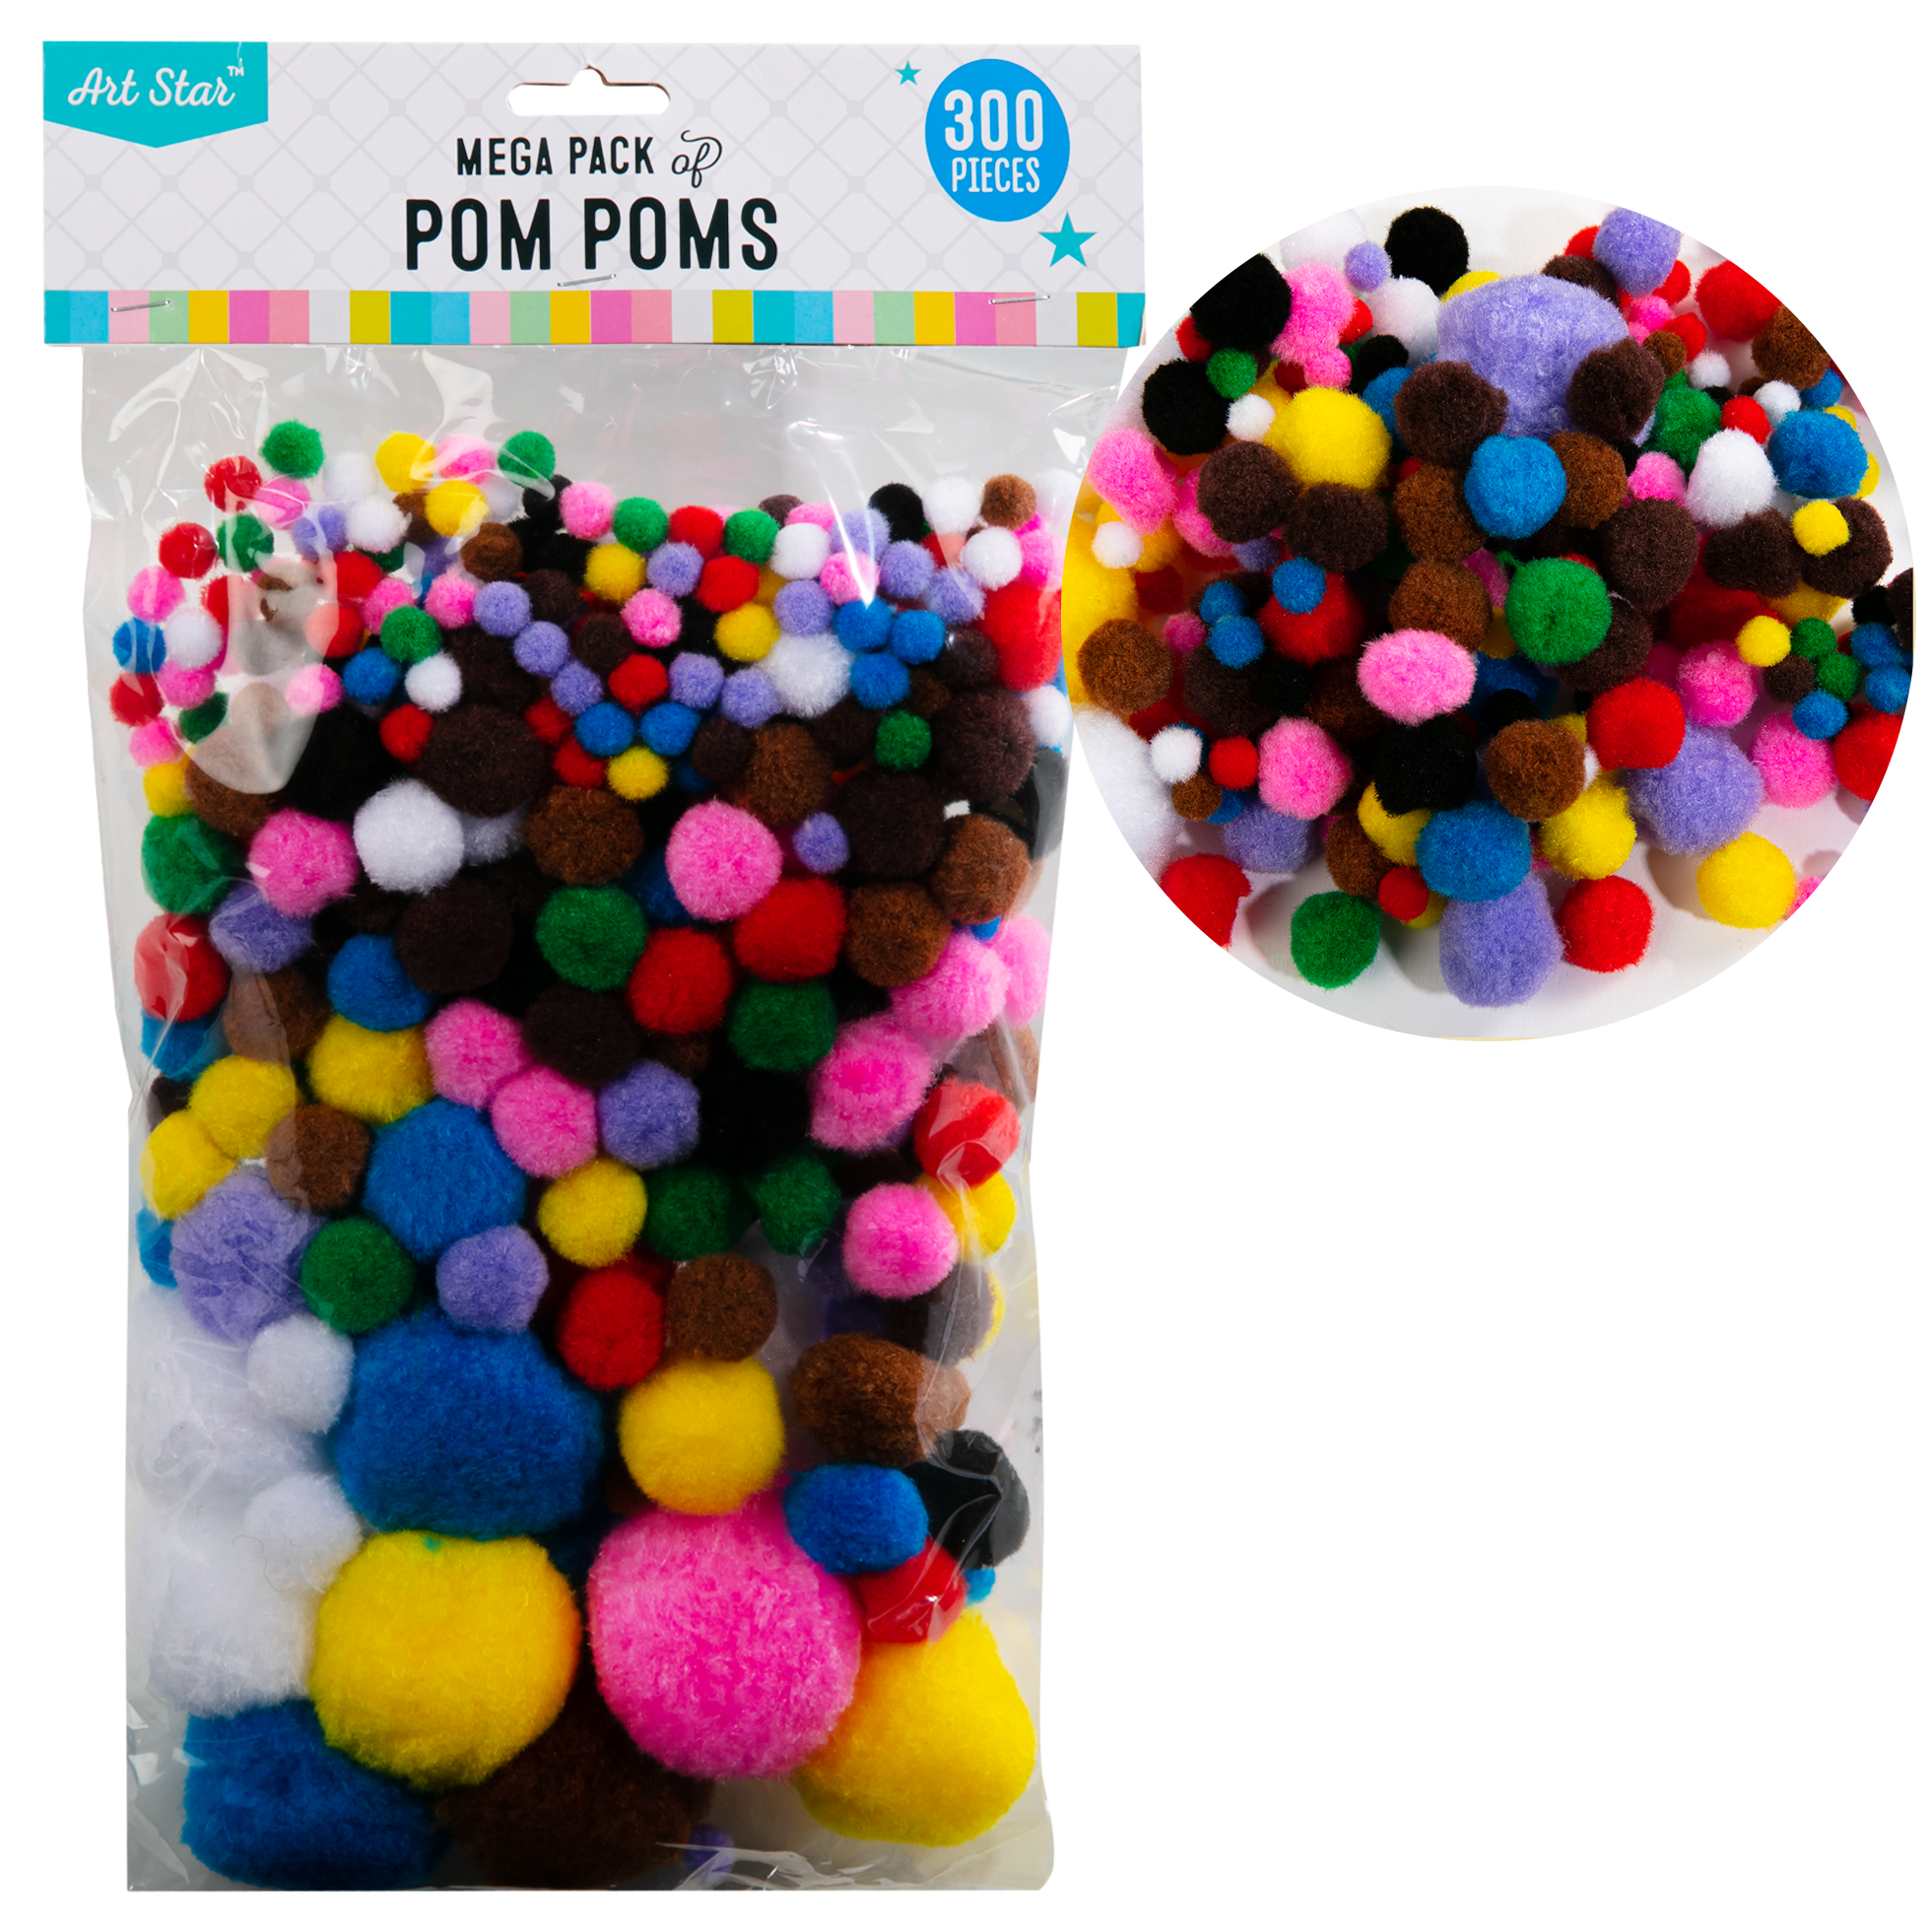 Craft Pom Poms